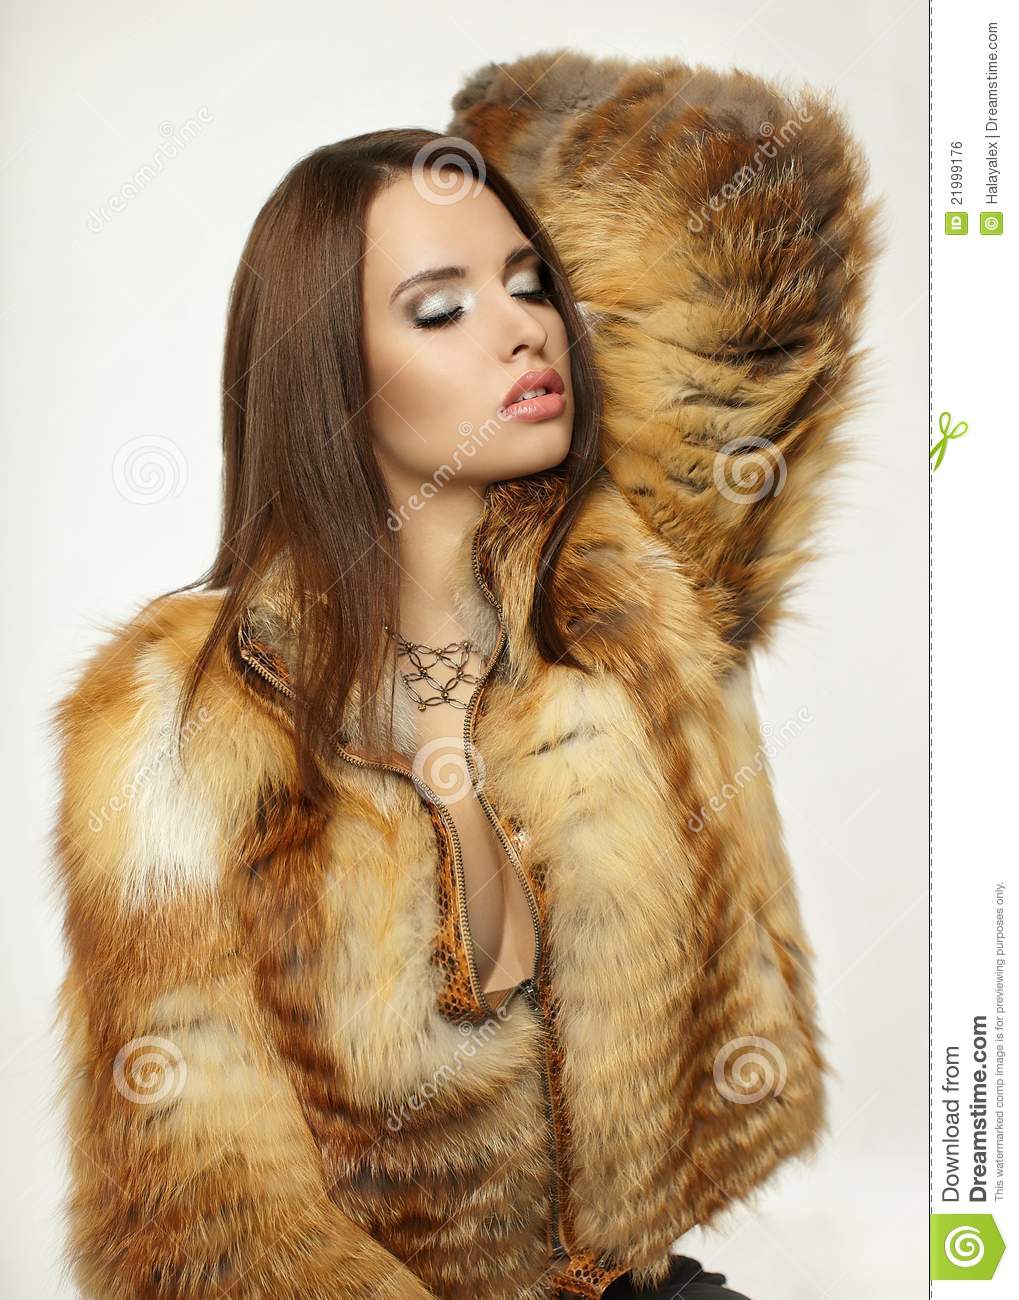 Free Stock Image  Beautiful Woman In A Fur Coat  Image  21999176